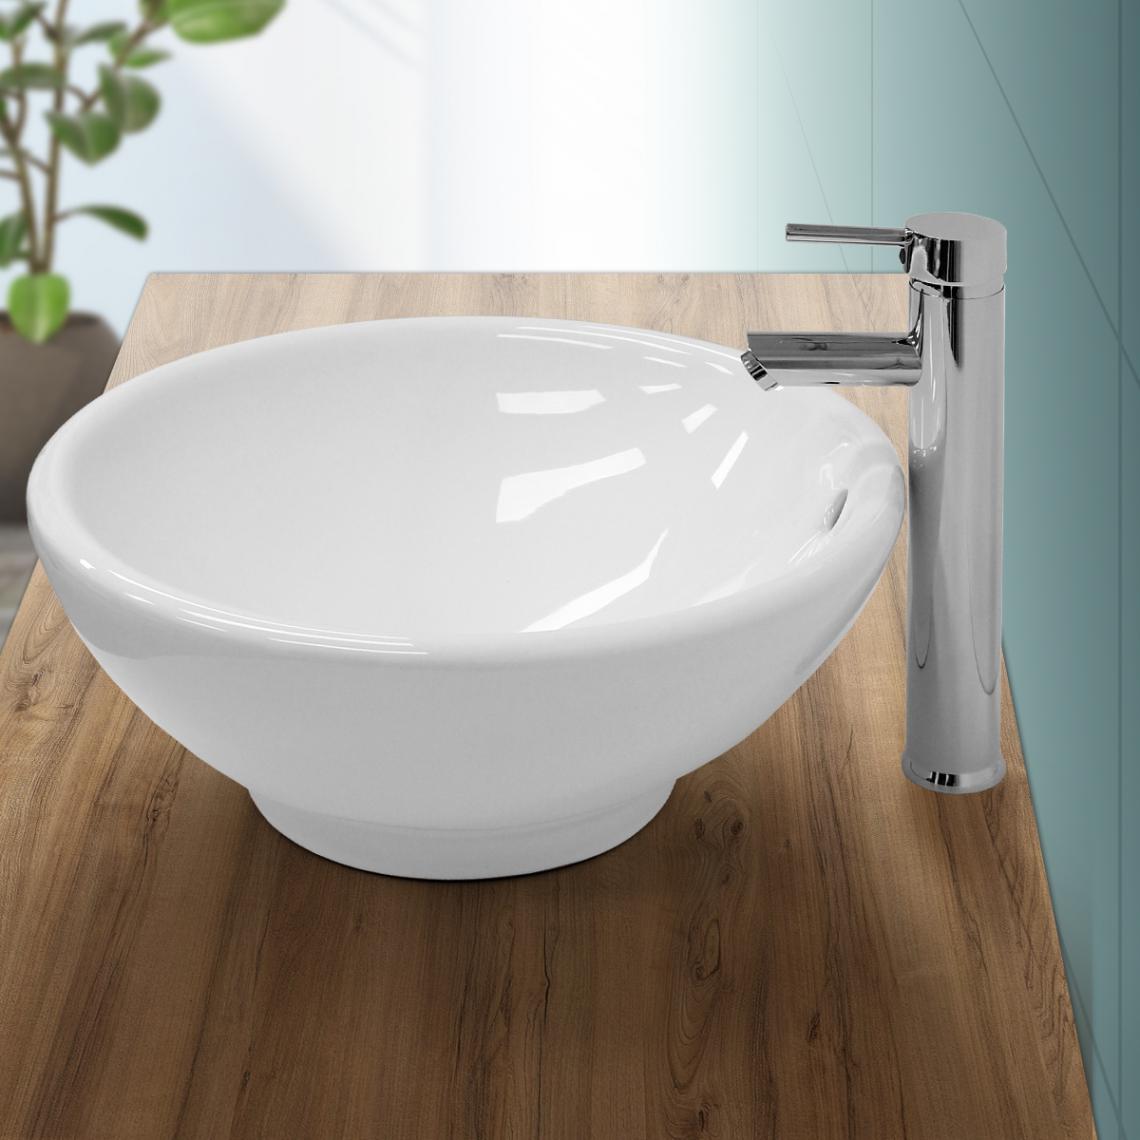 Ecd Germany - Lavabo en céramique blanc vasque a poser rond évier design moderne 420x170mm - Lavabo